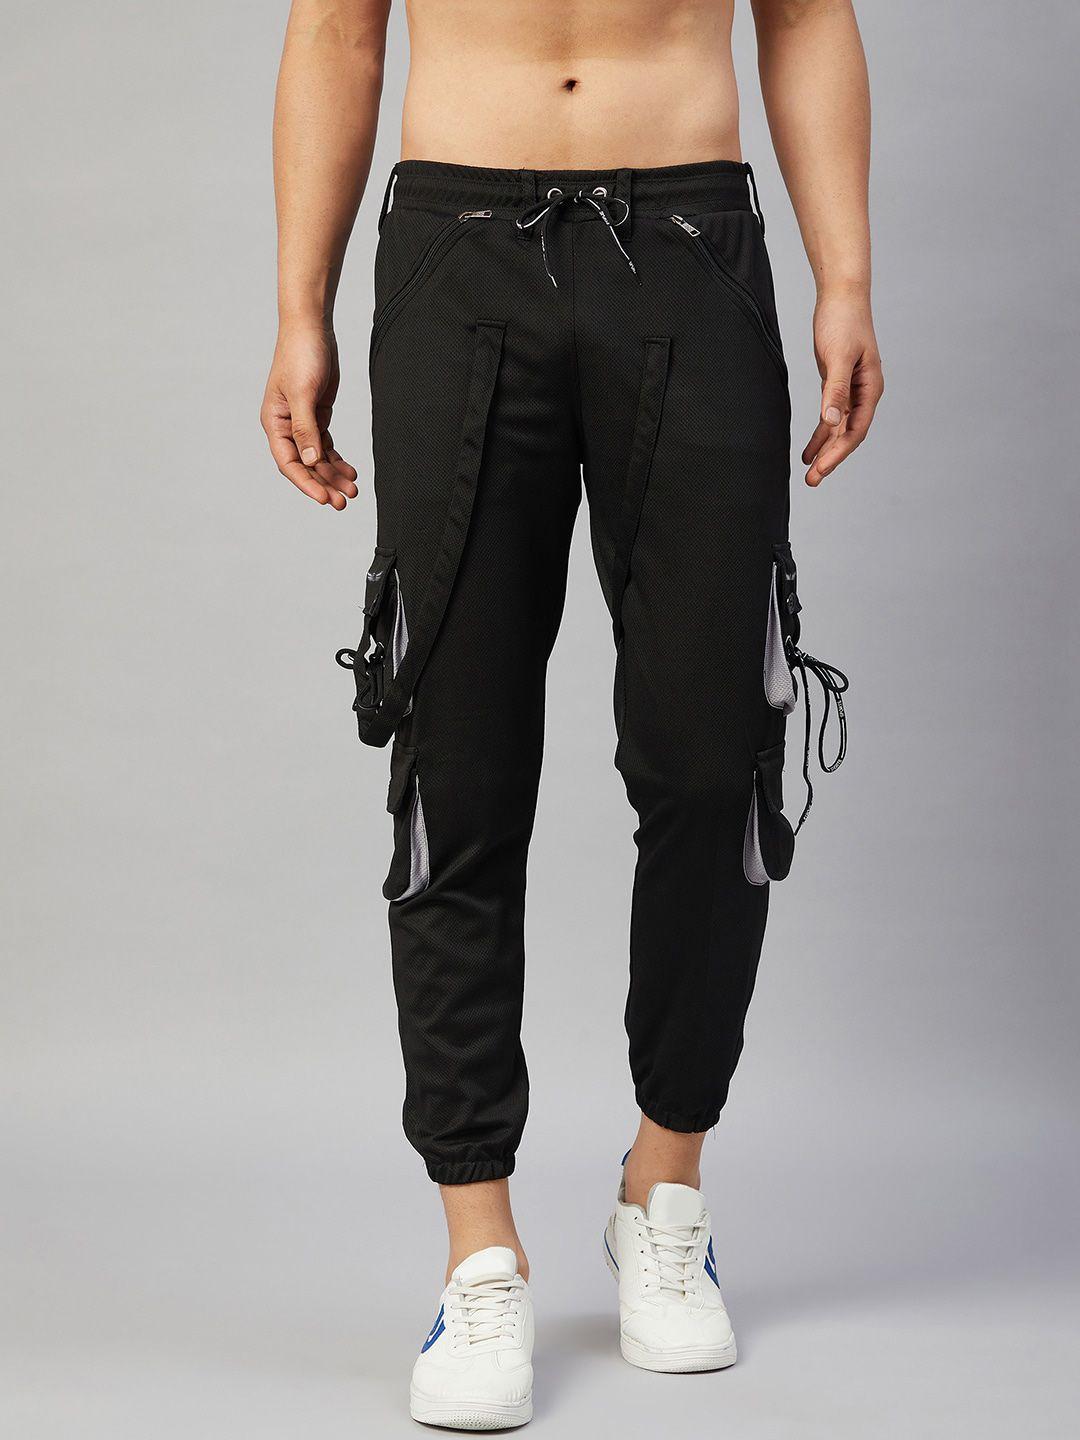 chrome & coral men black original wrinkle free joggers trousers